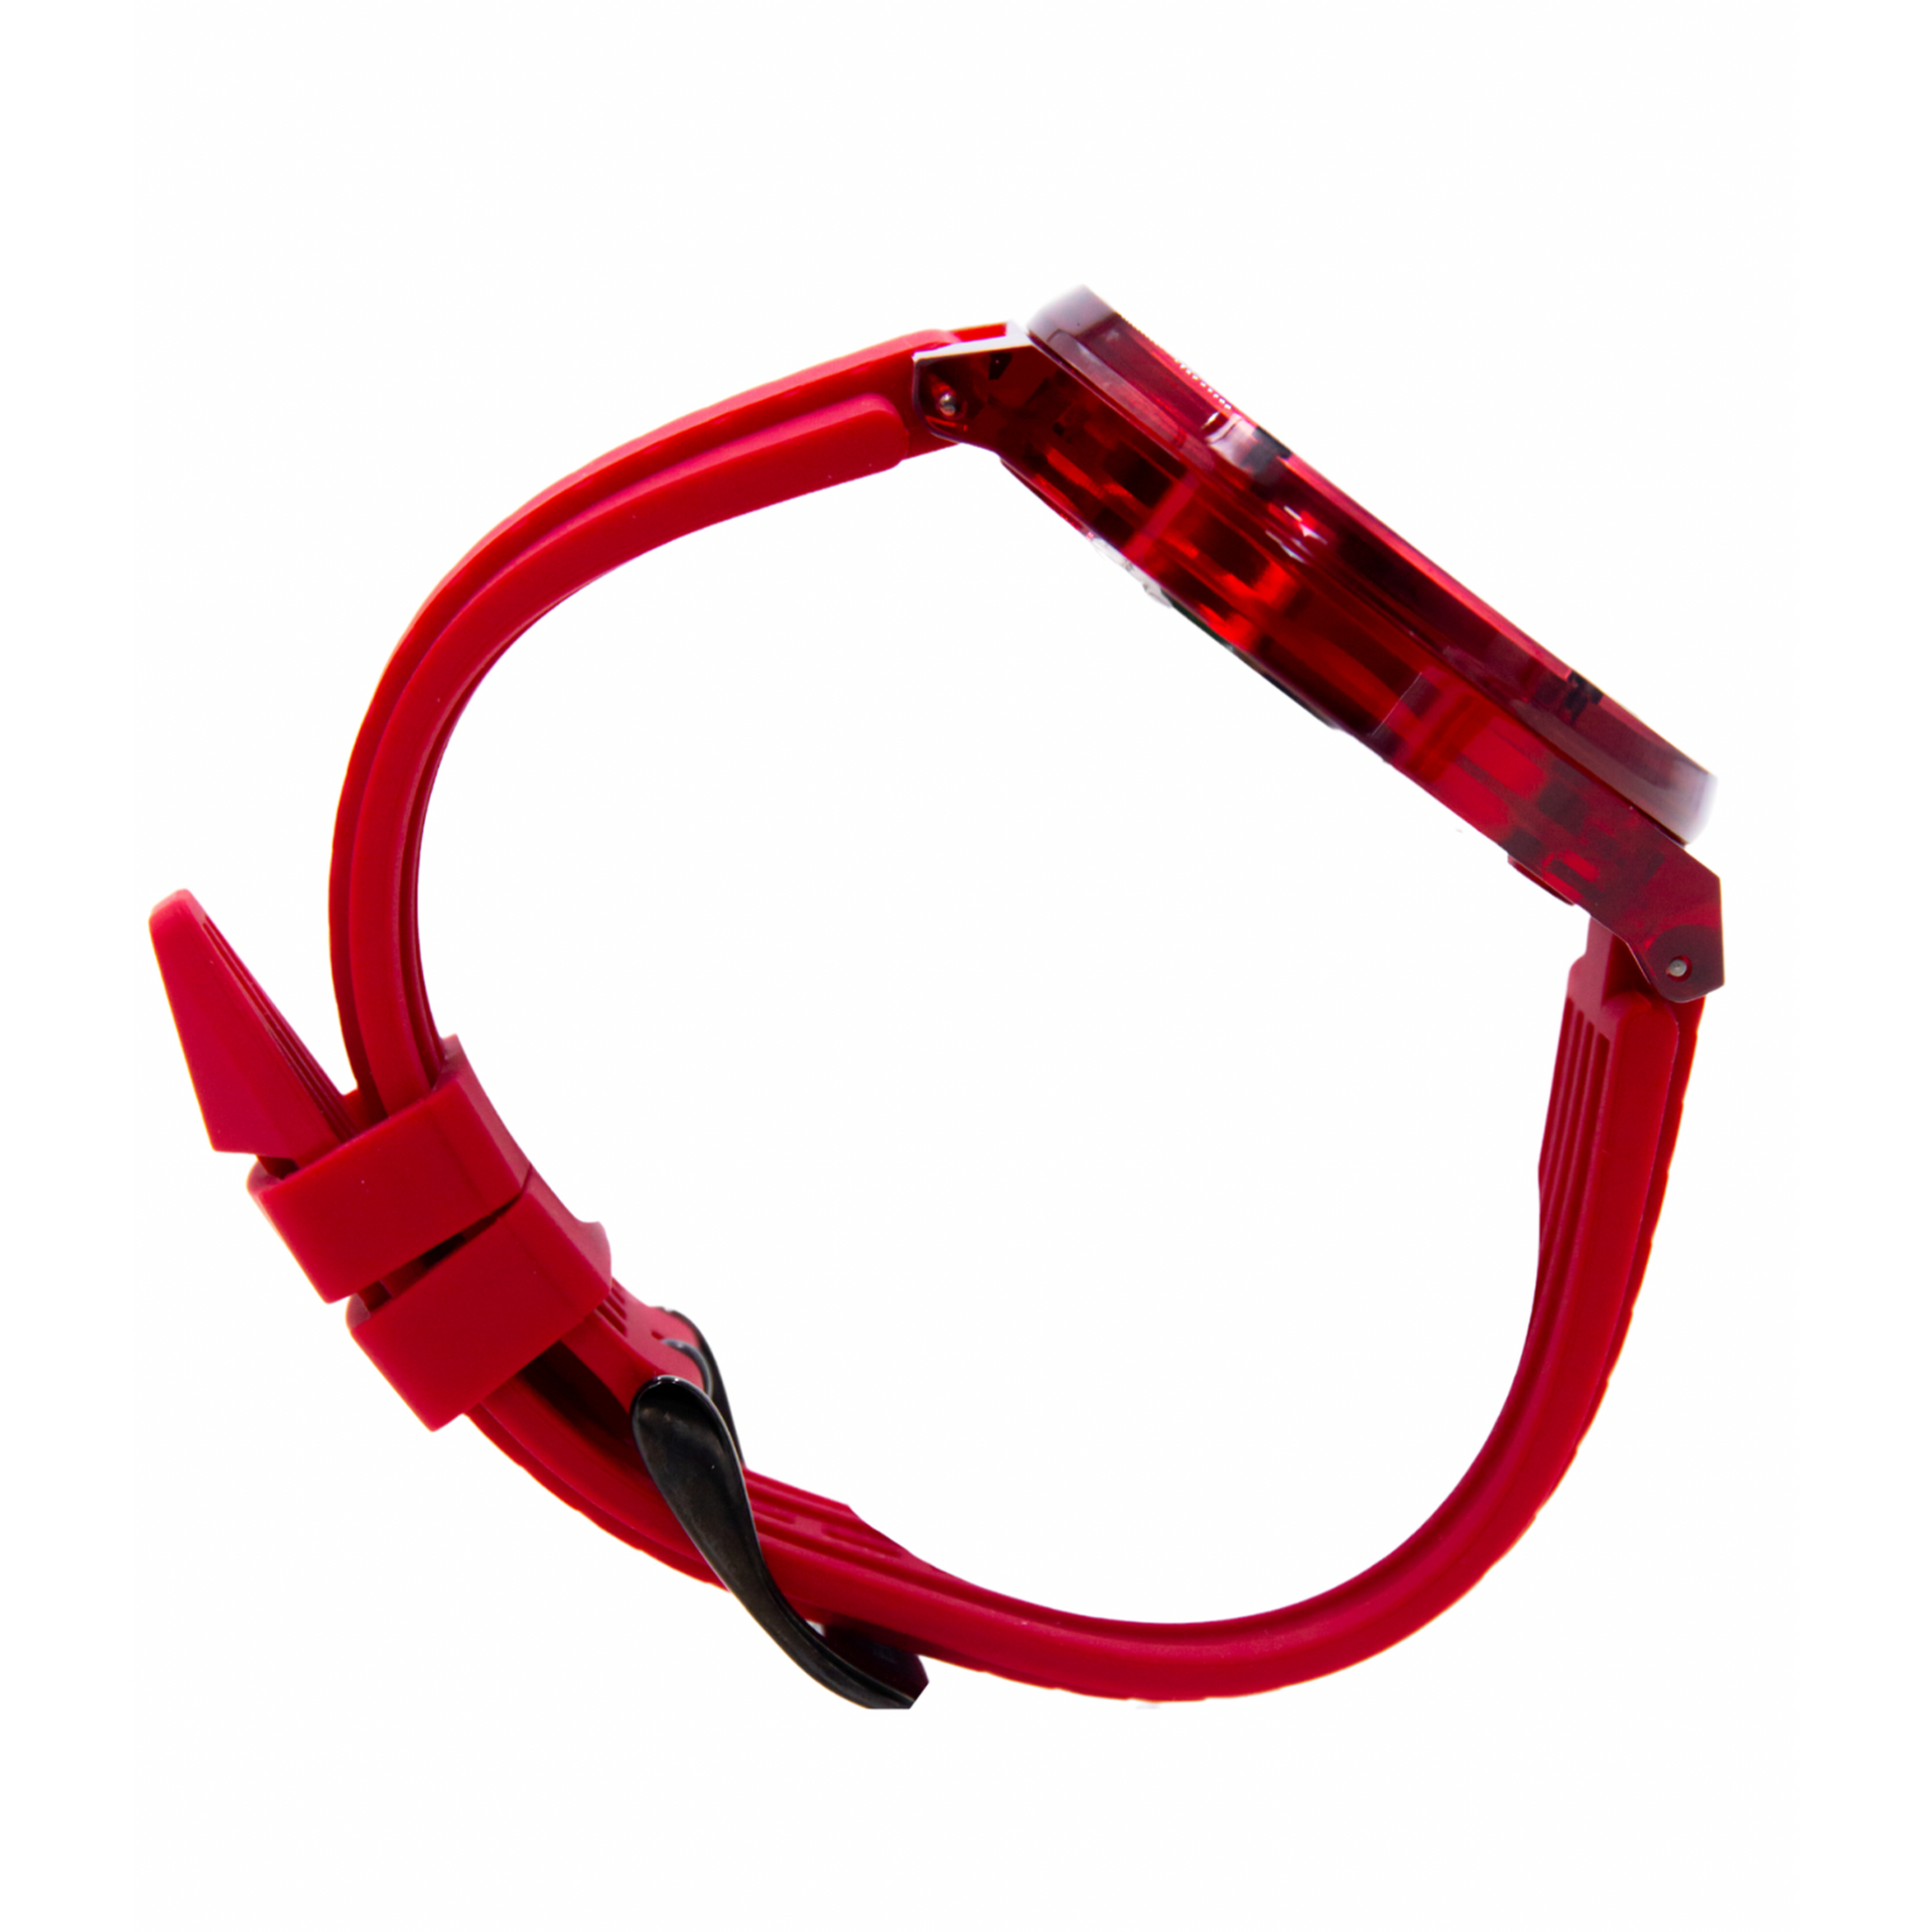 Michael Kors Men's Lennox Translucent Red Watch - MK8960 - 796483571495 